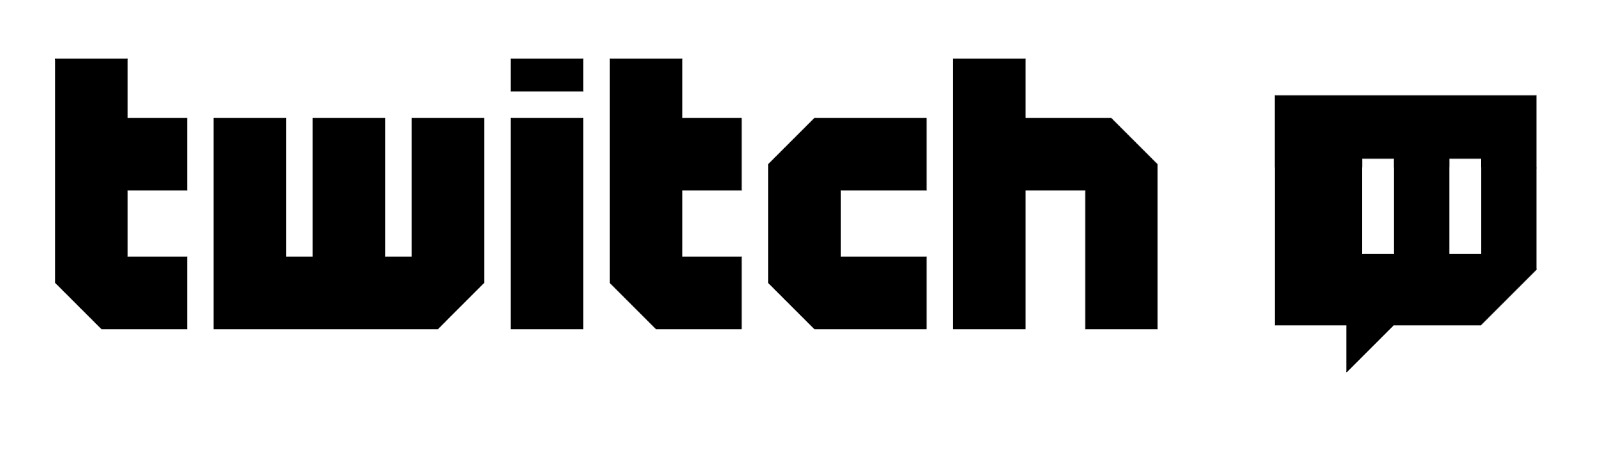 Black Twitch Logo - Black Twitch Logo Png Image